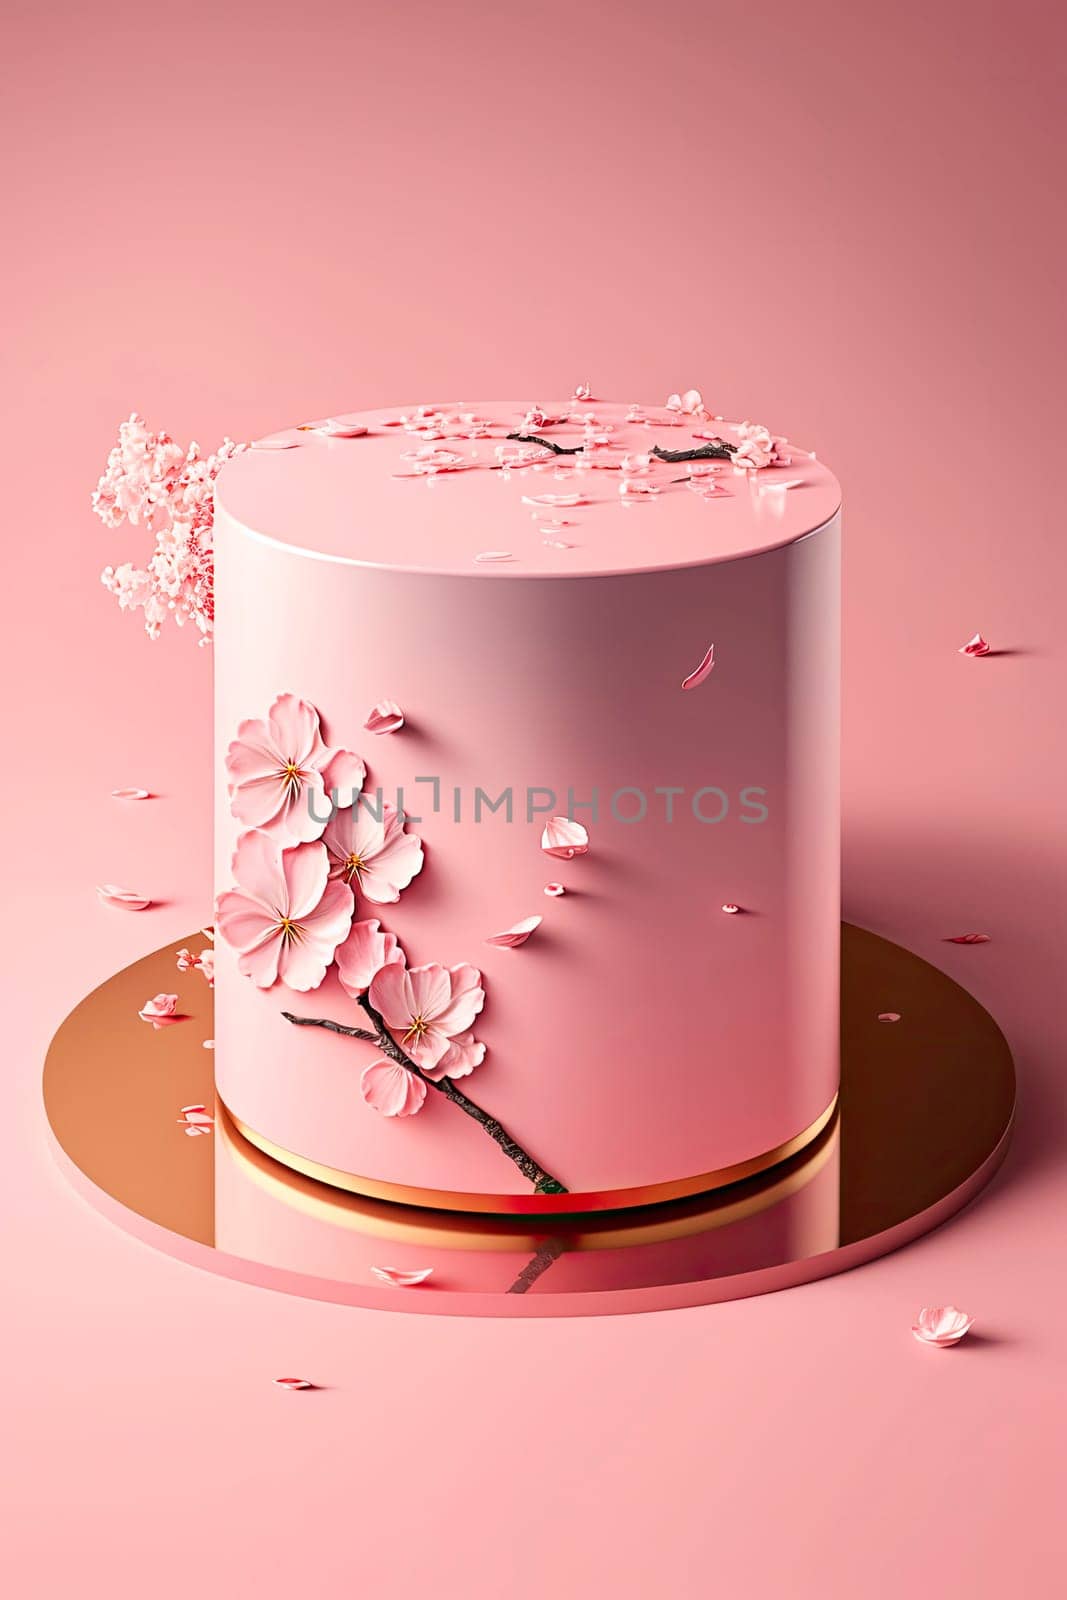 background, cosmetic product promotion podium, floral, pastel pedestal. by yanadjana